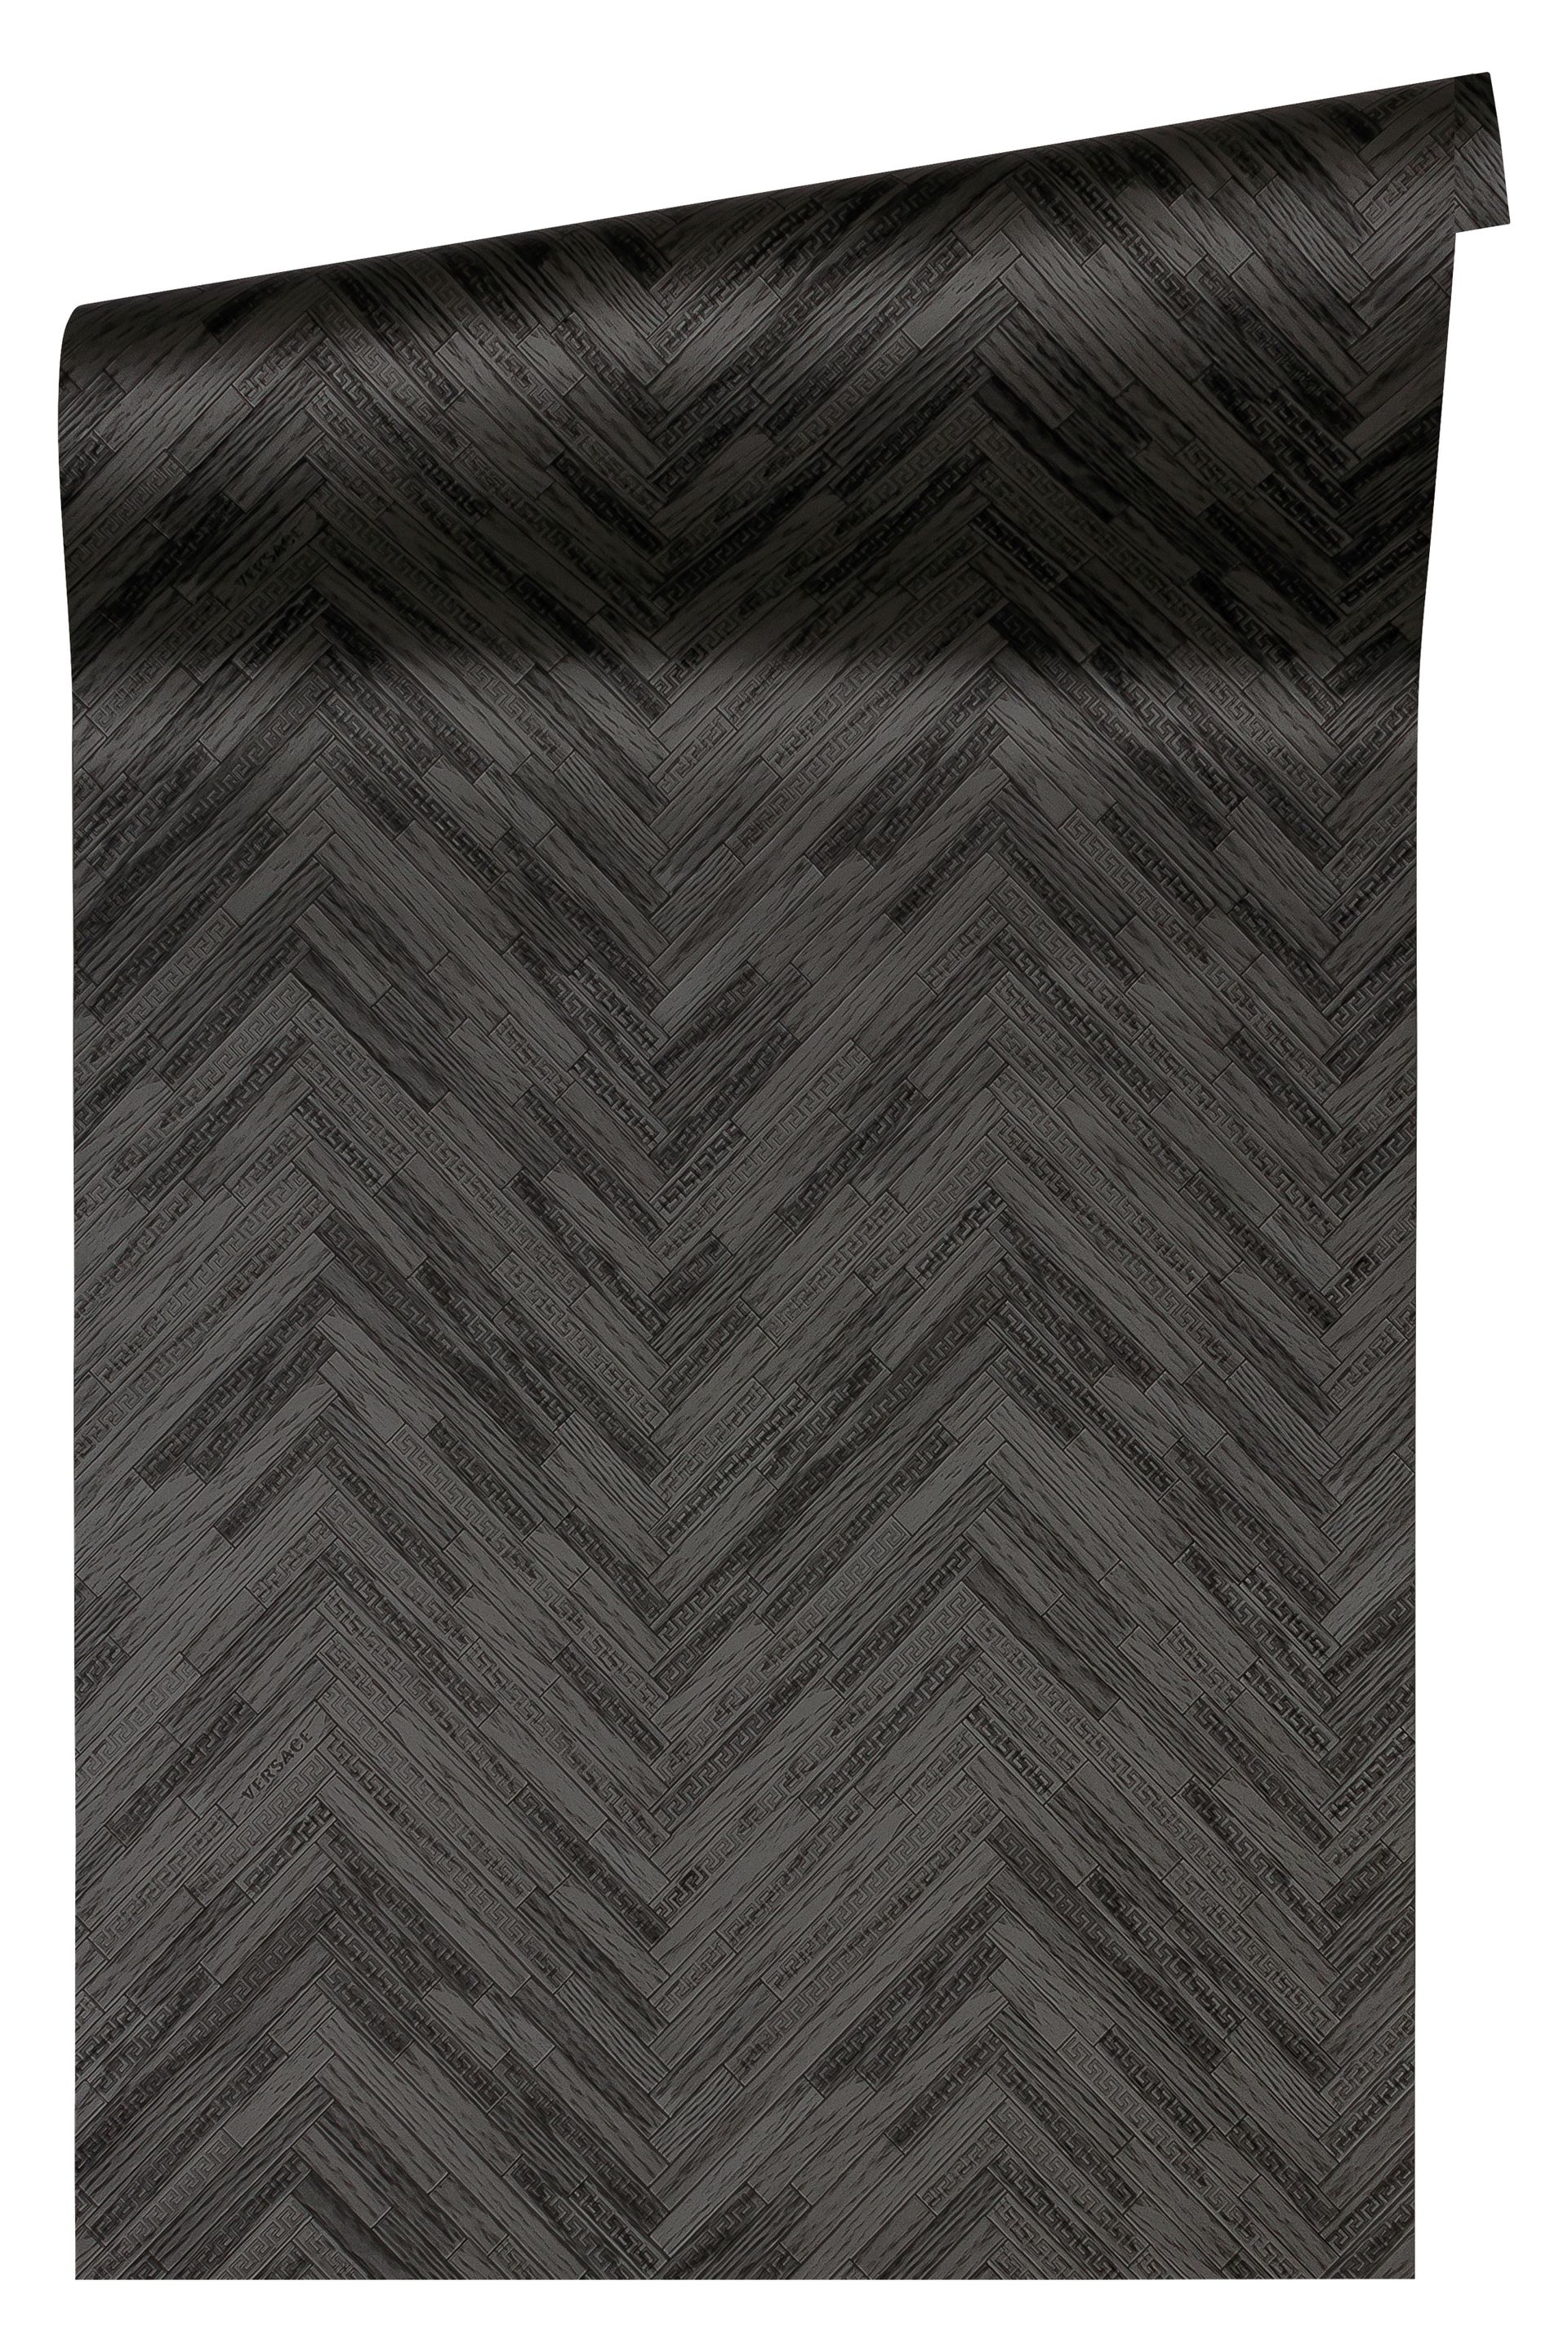 Versace wallpaper Versace 4, Tapete in Holzoptik, grau, schwarz 370514